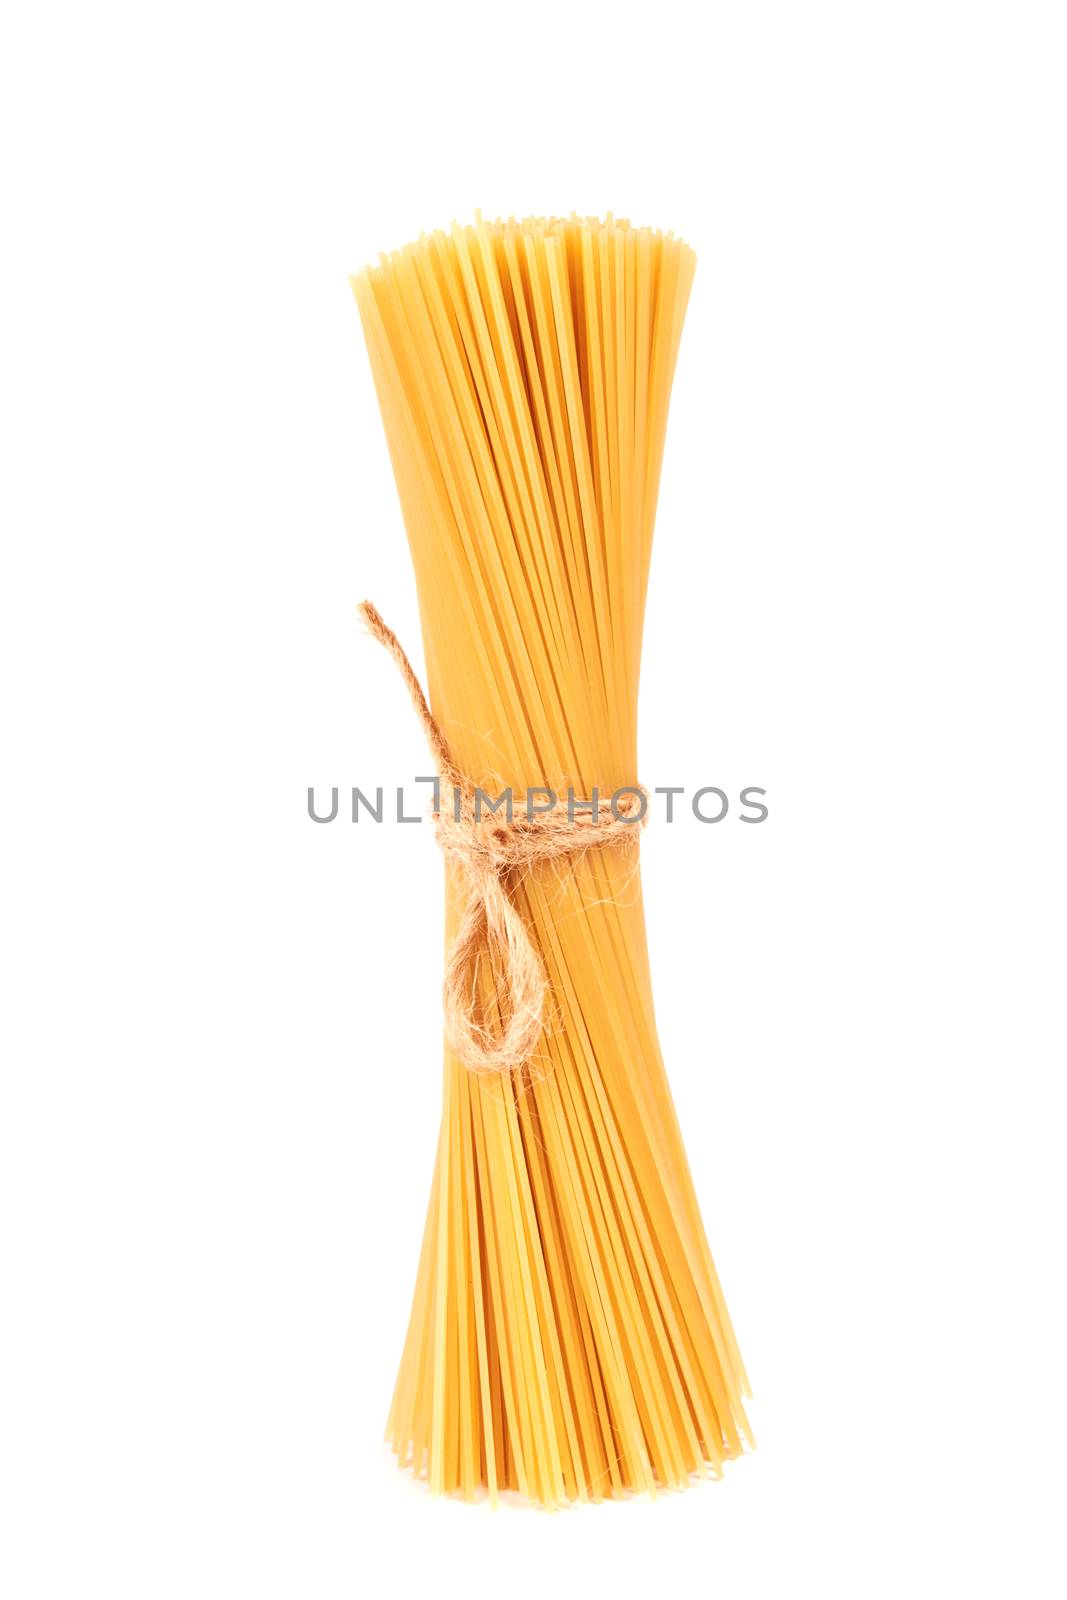  spaghetti by pioneer111